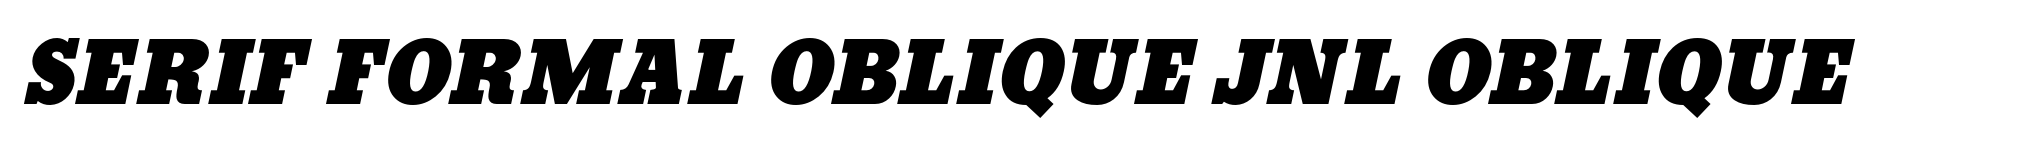 Serif Formal Oblique JNL Oblique image